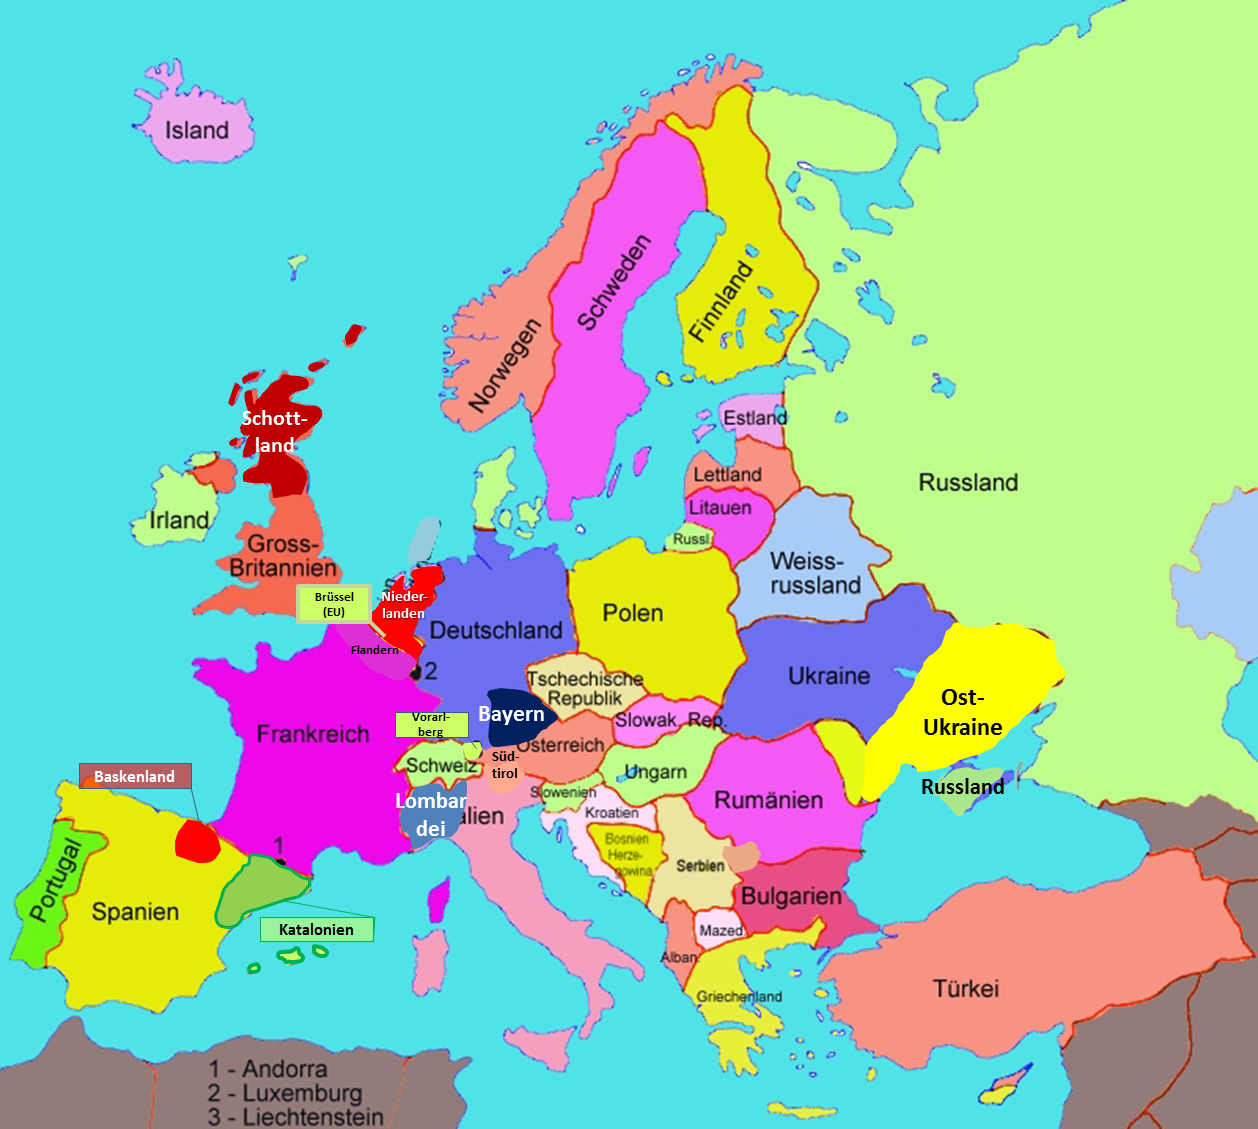 Europa und. Европа auf der Landkarte. Жители Европы auf Deutsch. Айзенбанвег Европа. Европа маргинализируется.